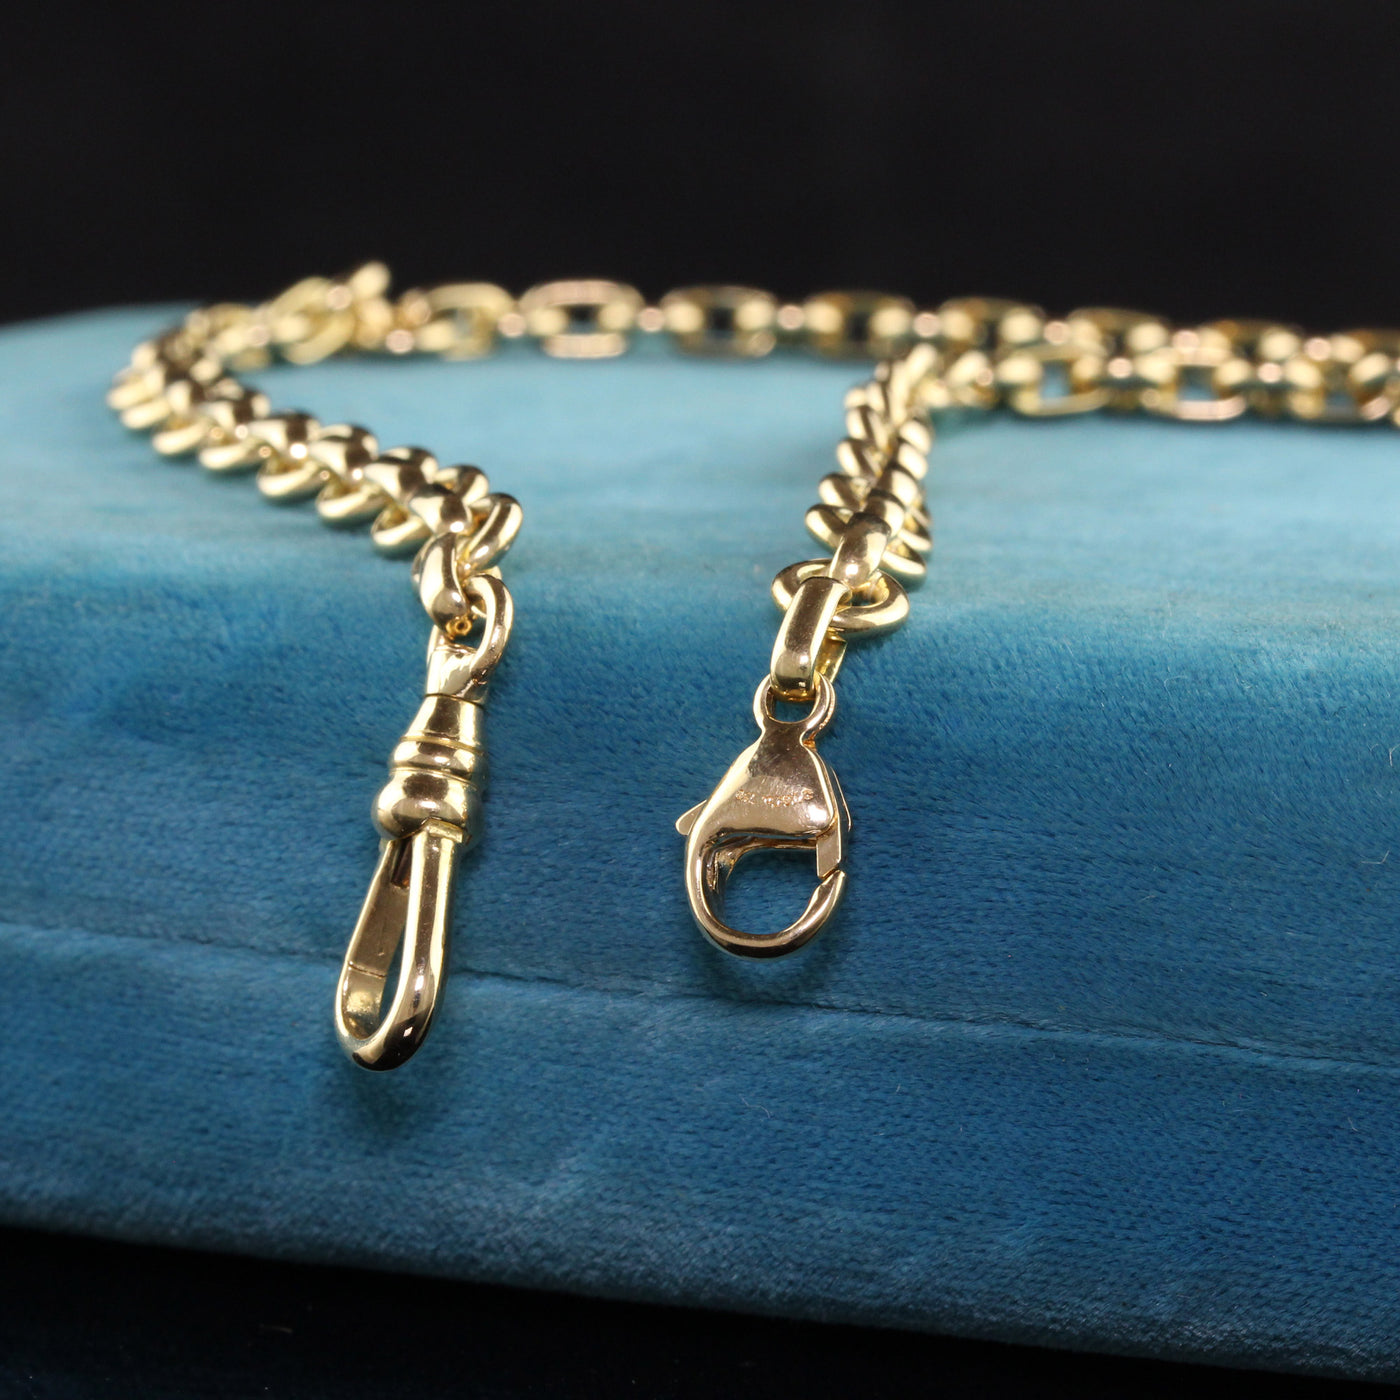 Tiffany & CO 18K Gold Heart Locket – Vintage by Misty